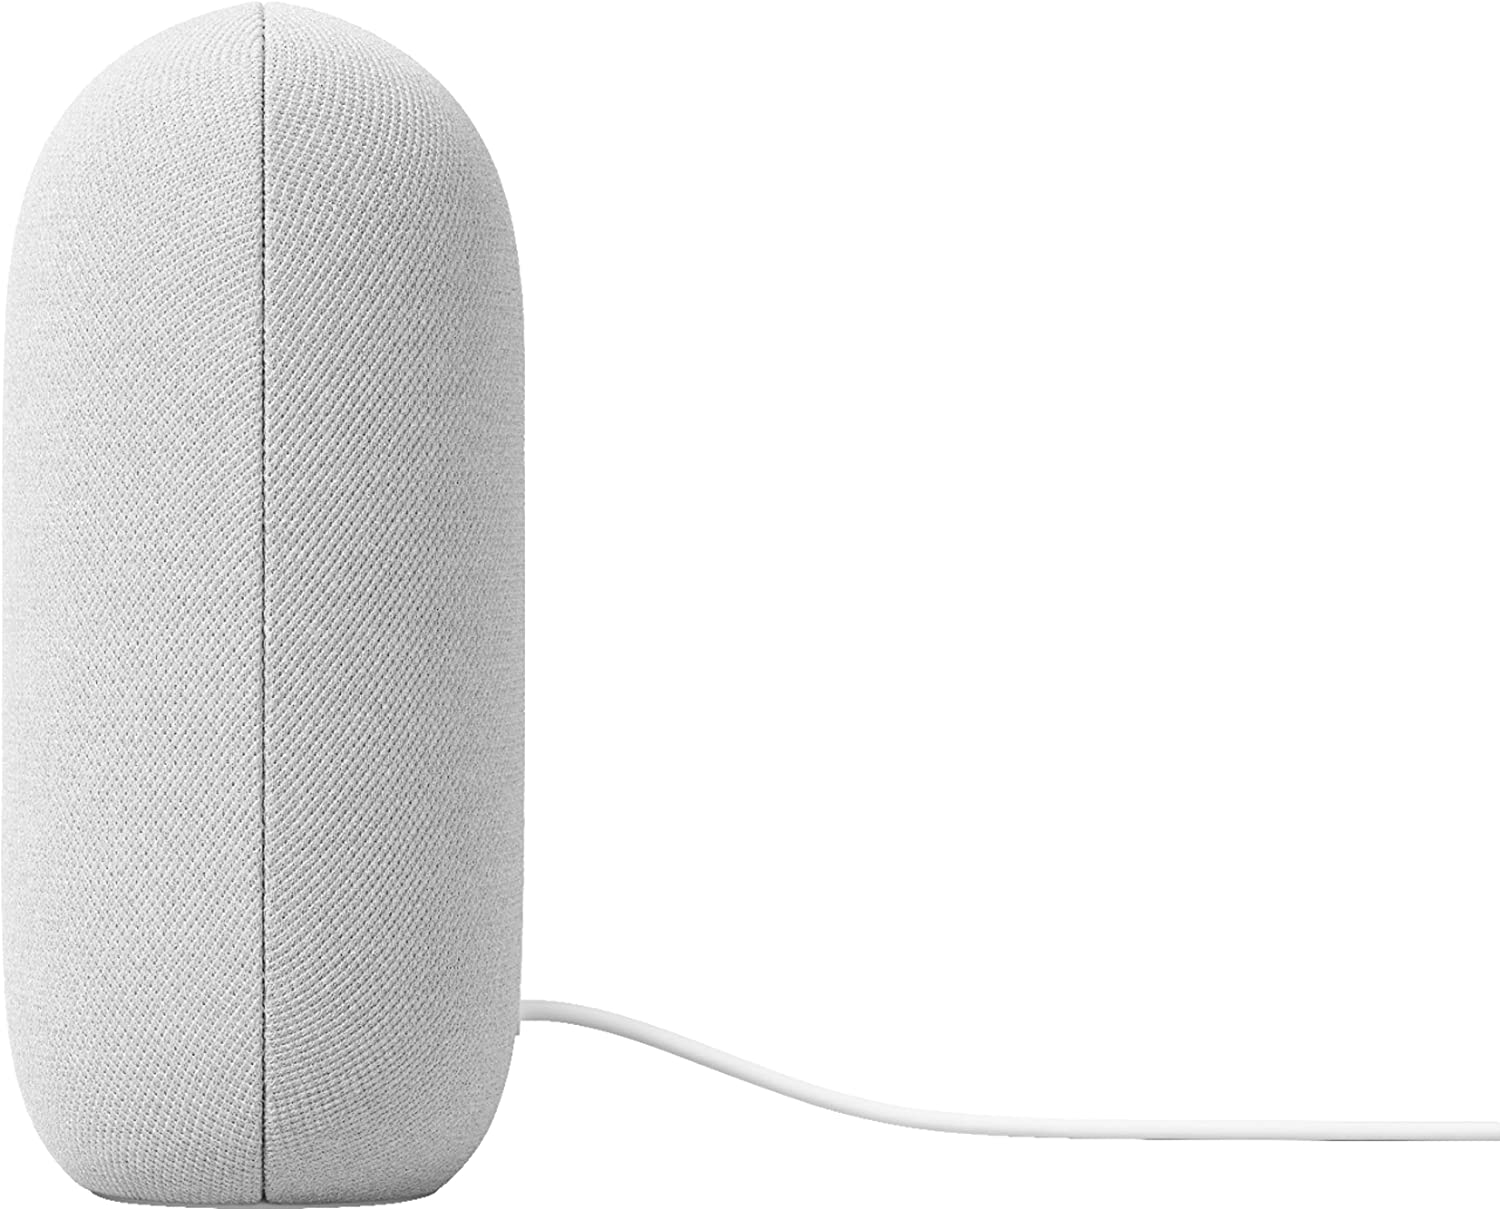 Google Nest Audio - Smart Speaker with Google Assistant - Chalk - image 3 of 4